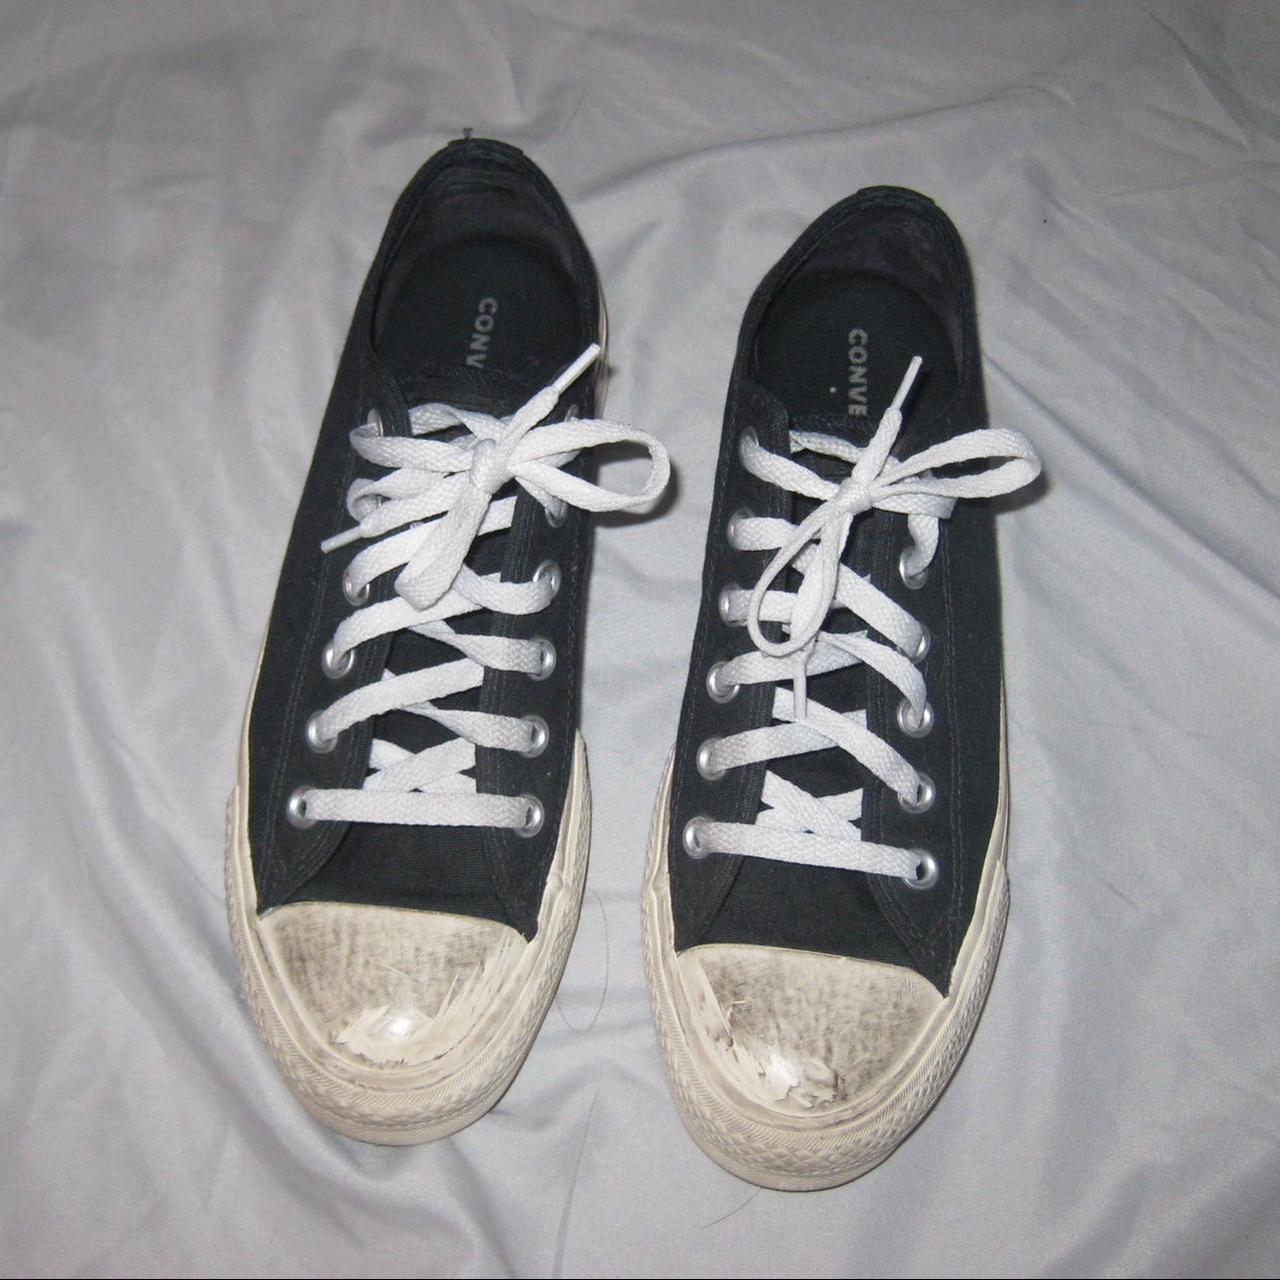 Custom Converse All Star low top sneakers. The - Depop